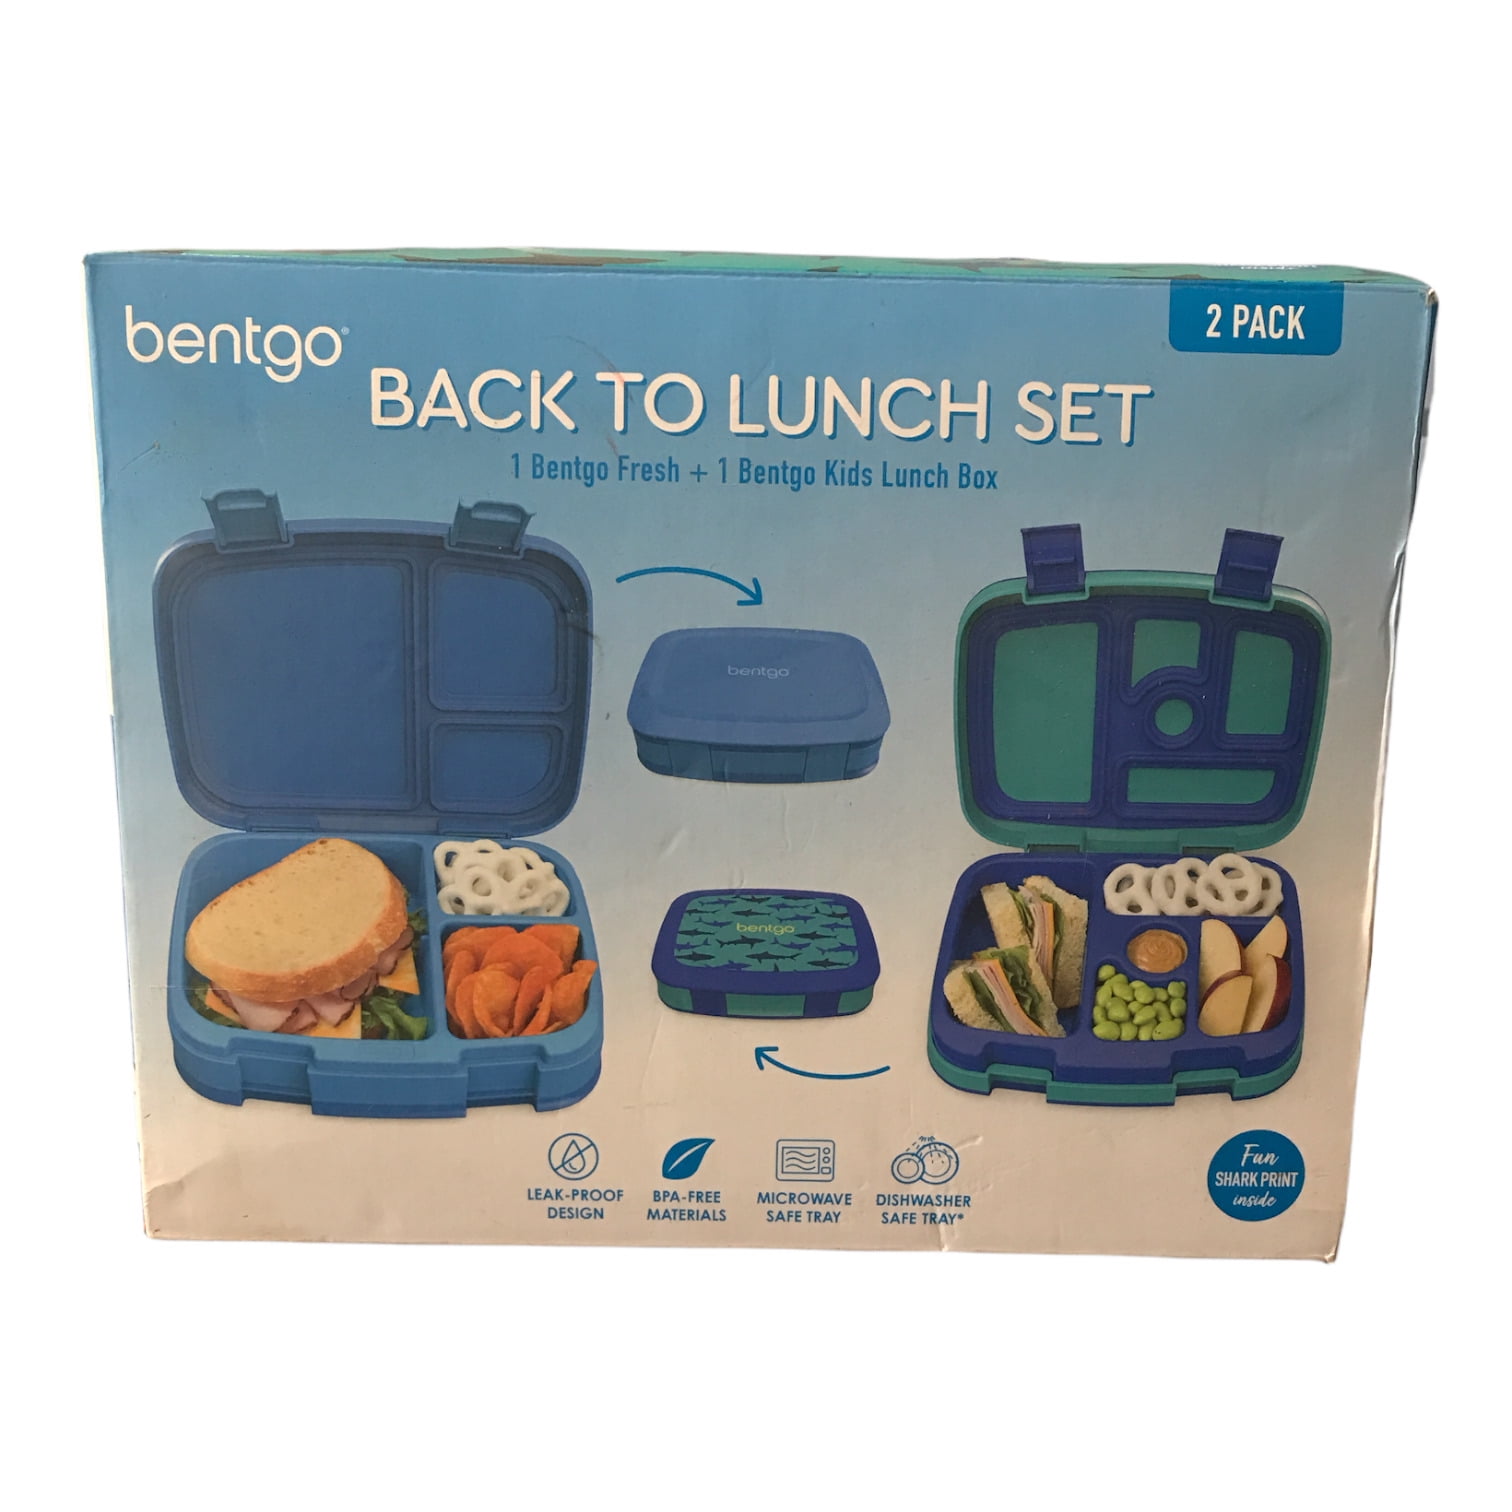 One Bentgo Fresh and One Bentgo Kids Lunch Box (Shark Print